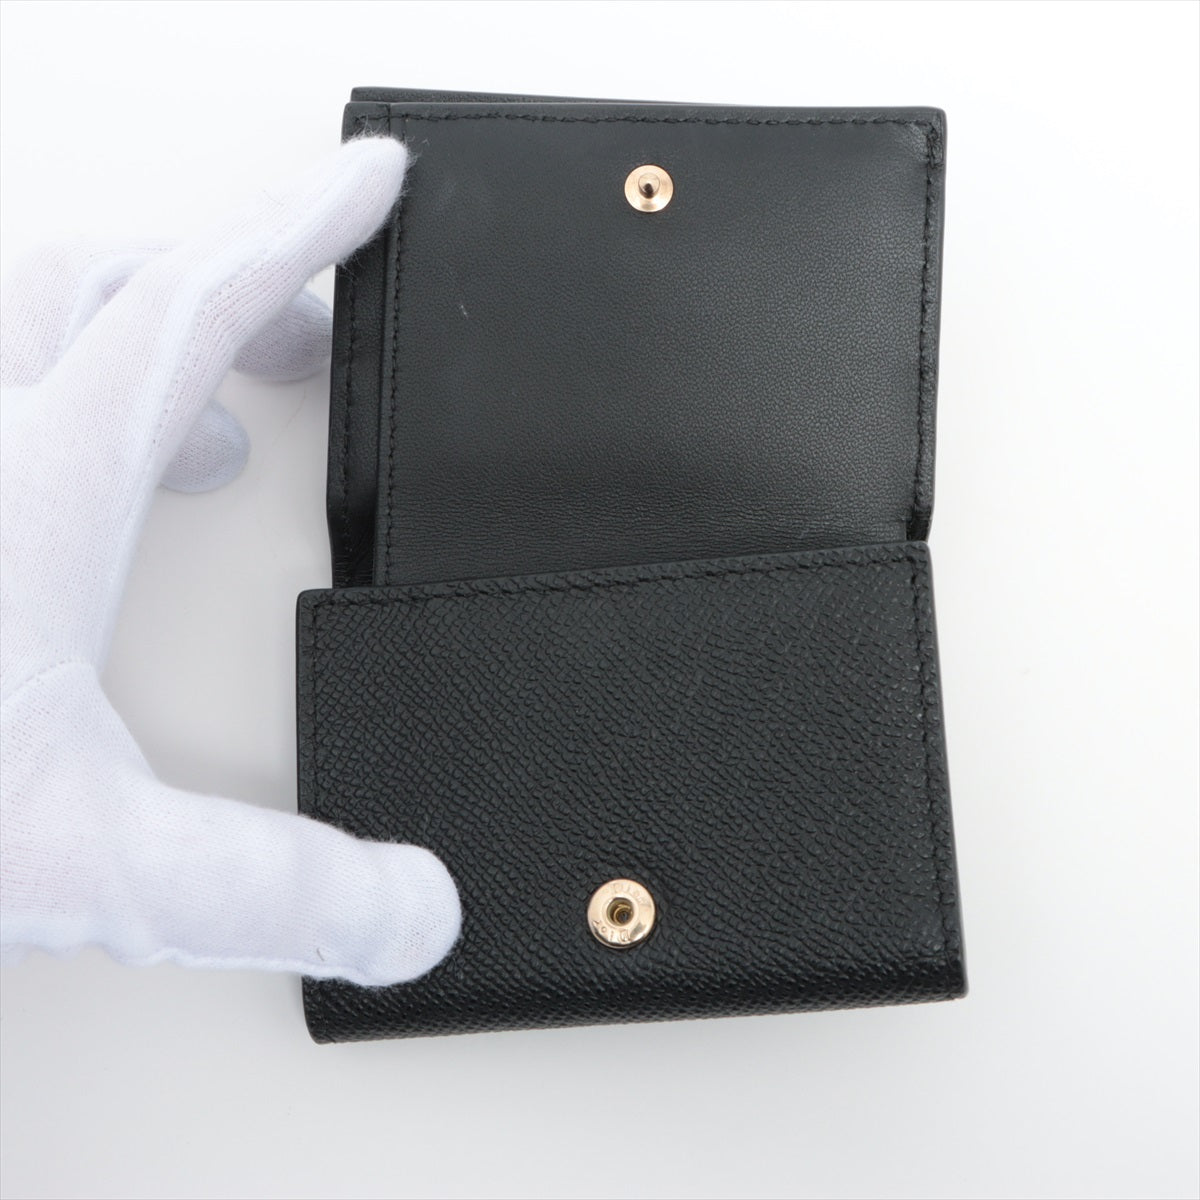 Dior Montaigne Leather Wallet Black